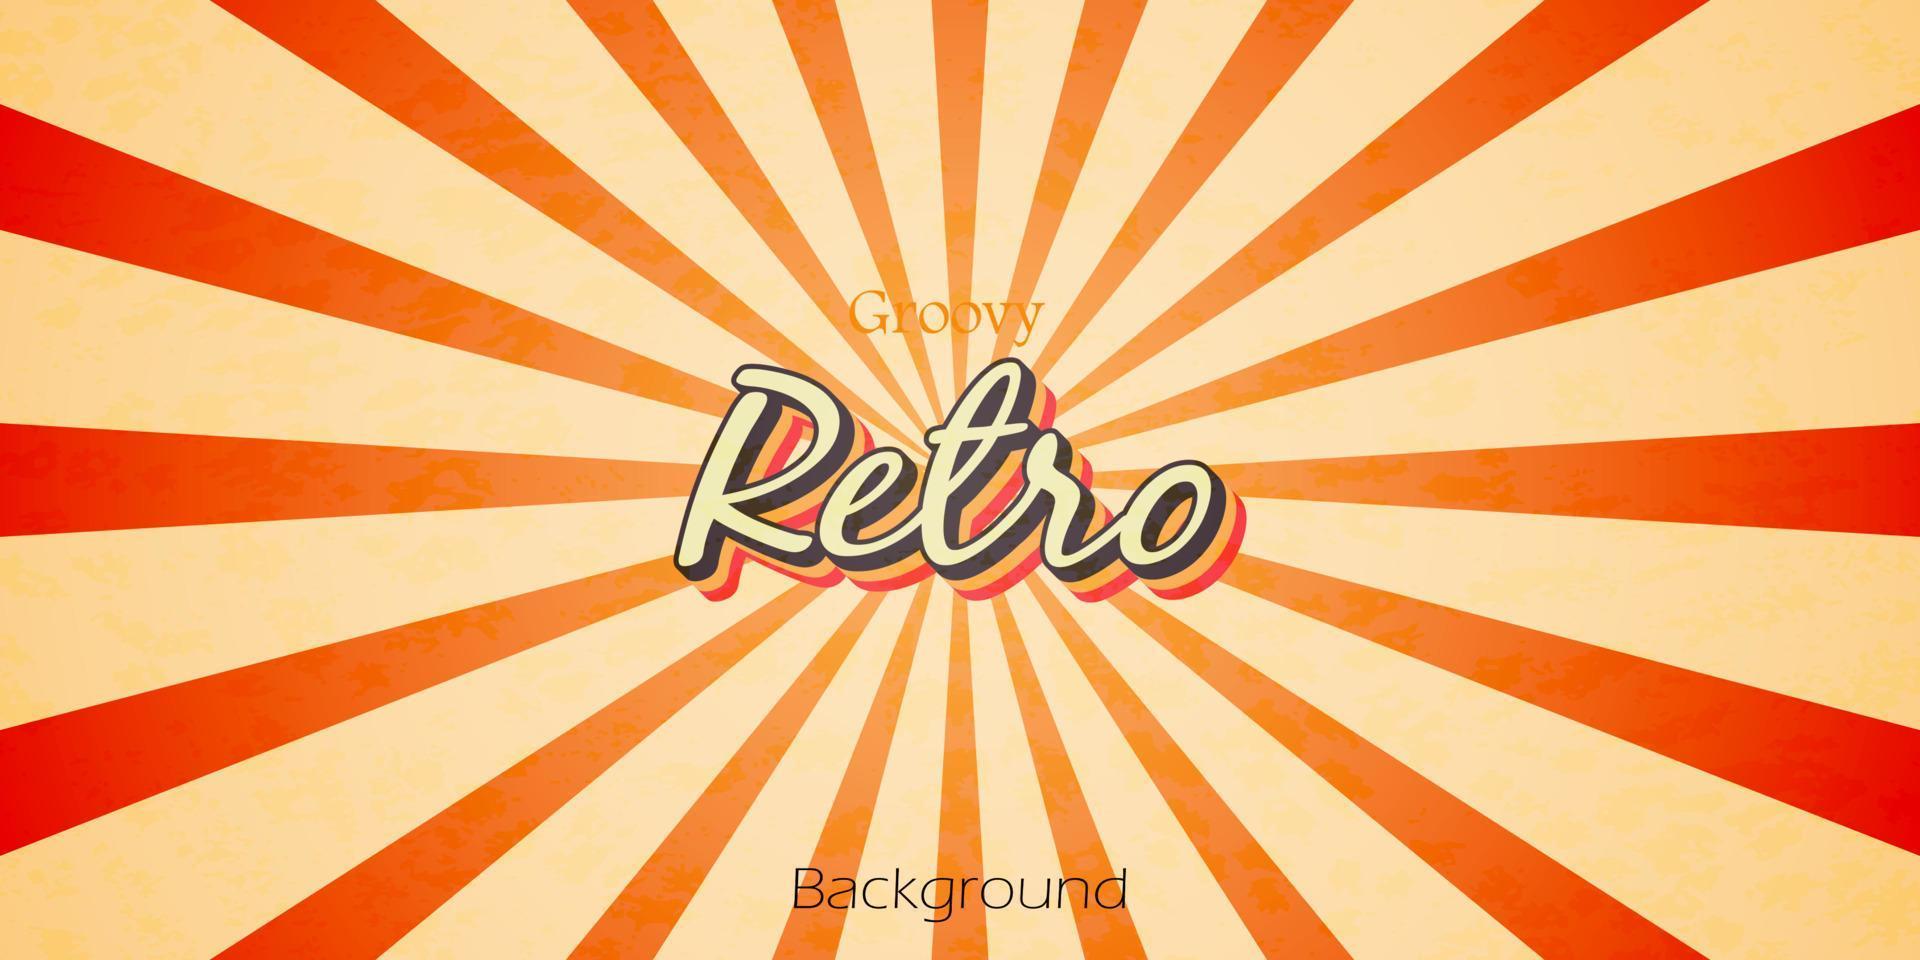 Retro style background with groovy sunburst vector